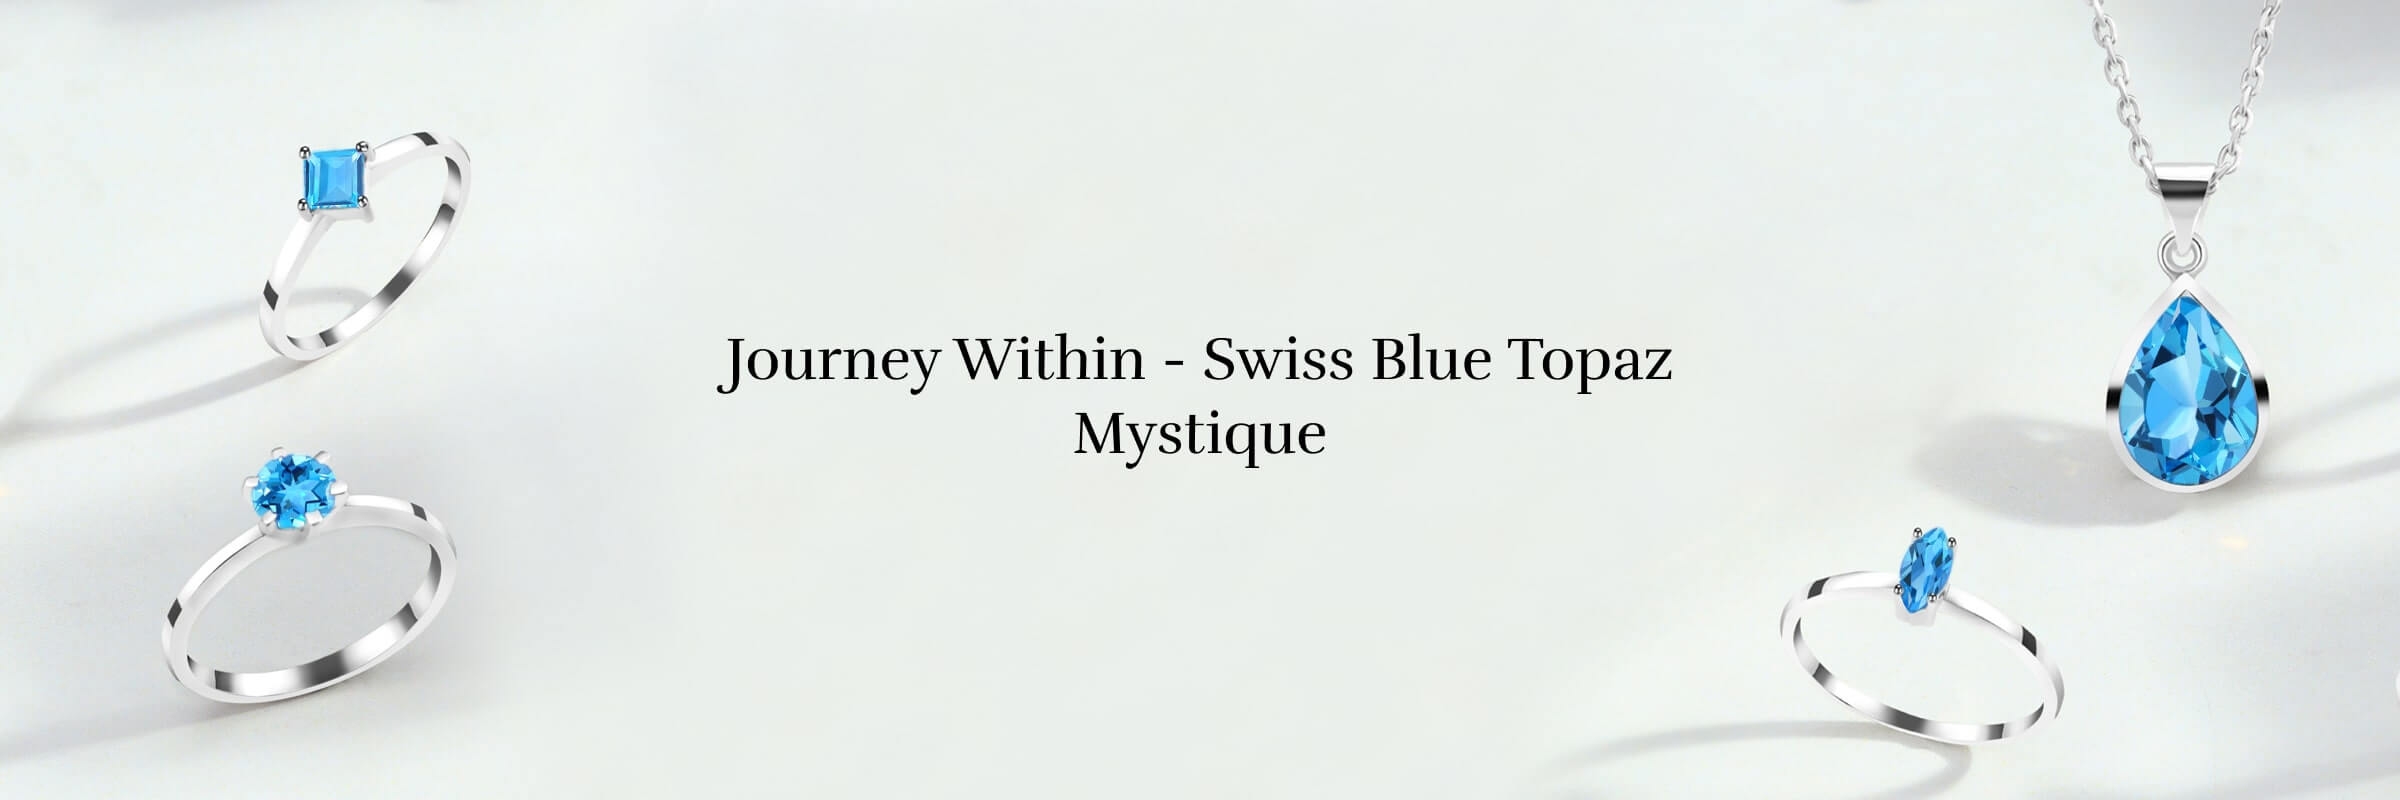 Swiss Blue Topaz Metaphysical Properties